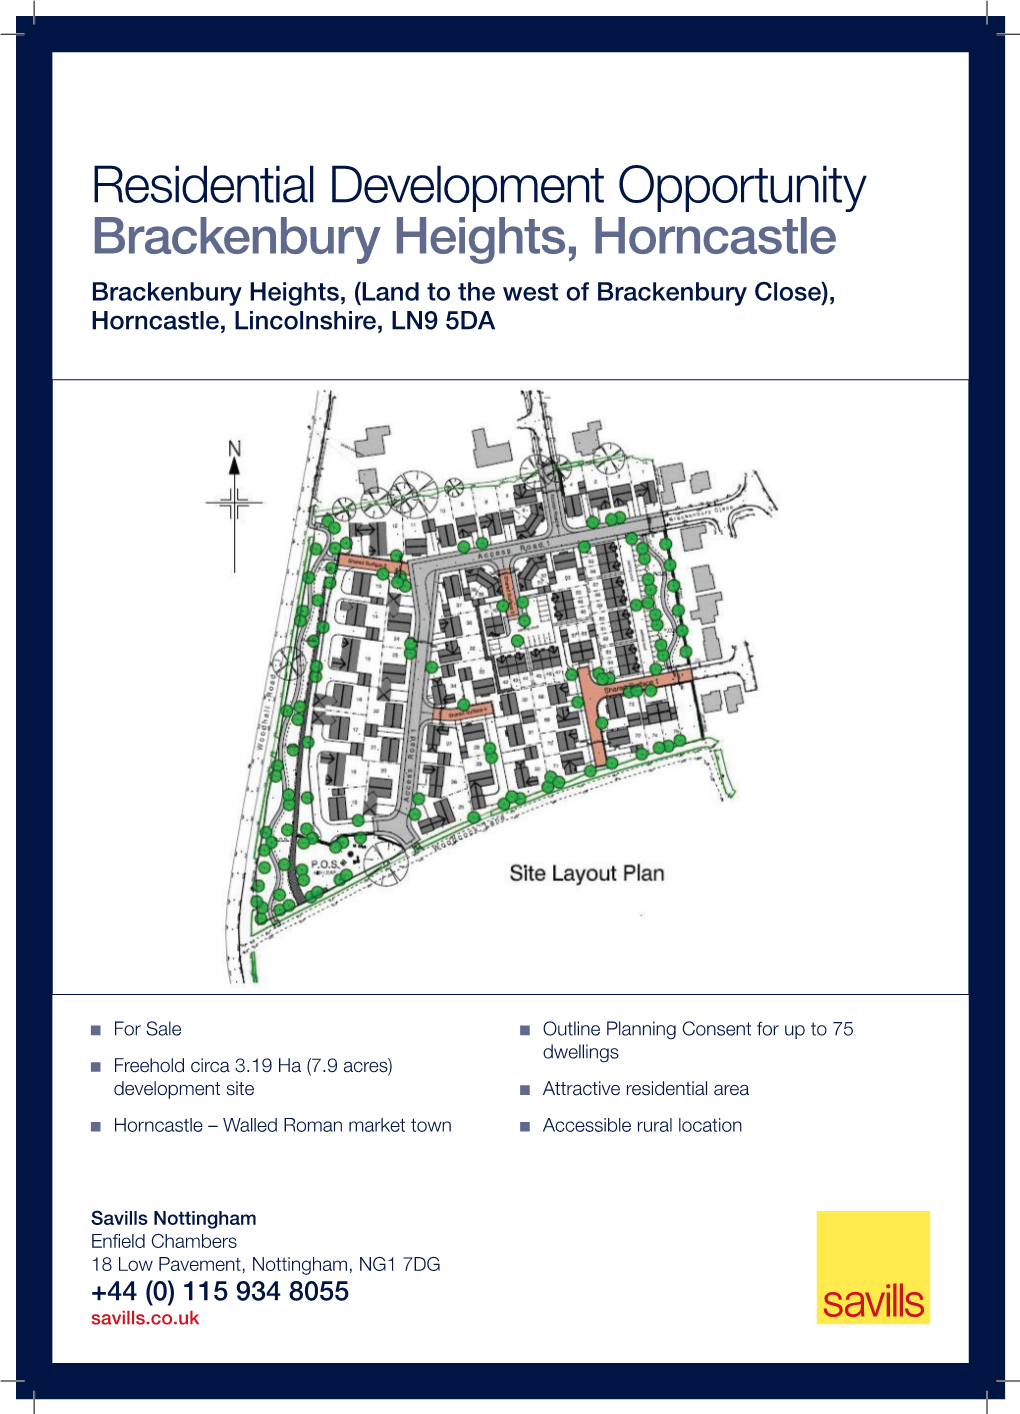 Residential Development Opportunity Brackenbury Heights, Horncastle Brackenbury Heights, (Land to the West of Brackenbury Close), Horncastle, Lincolnshire, LN9 5DA